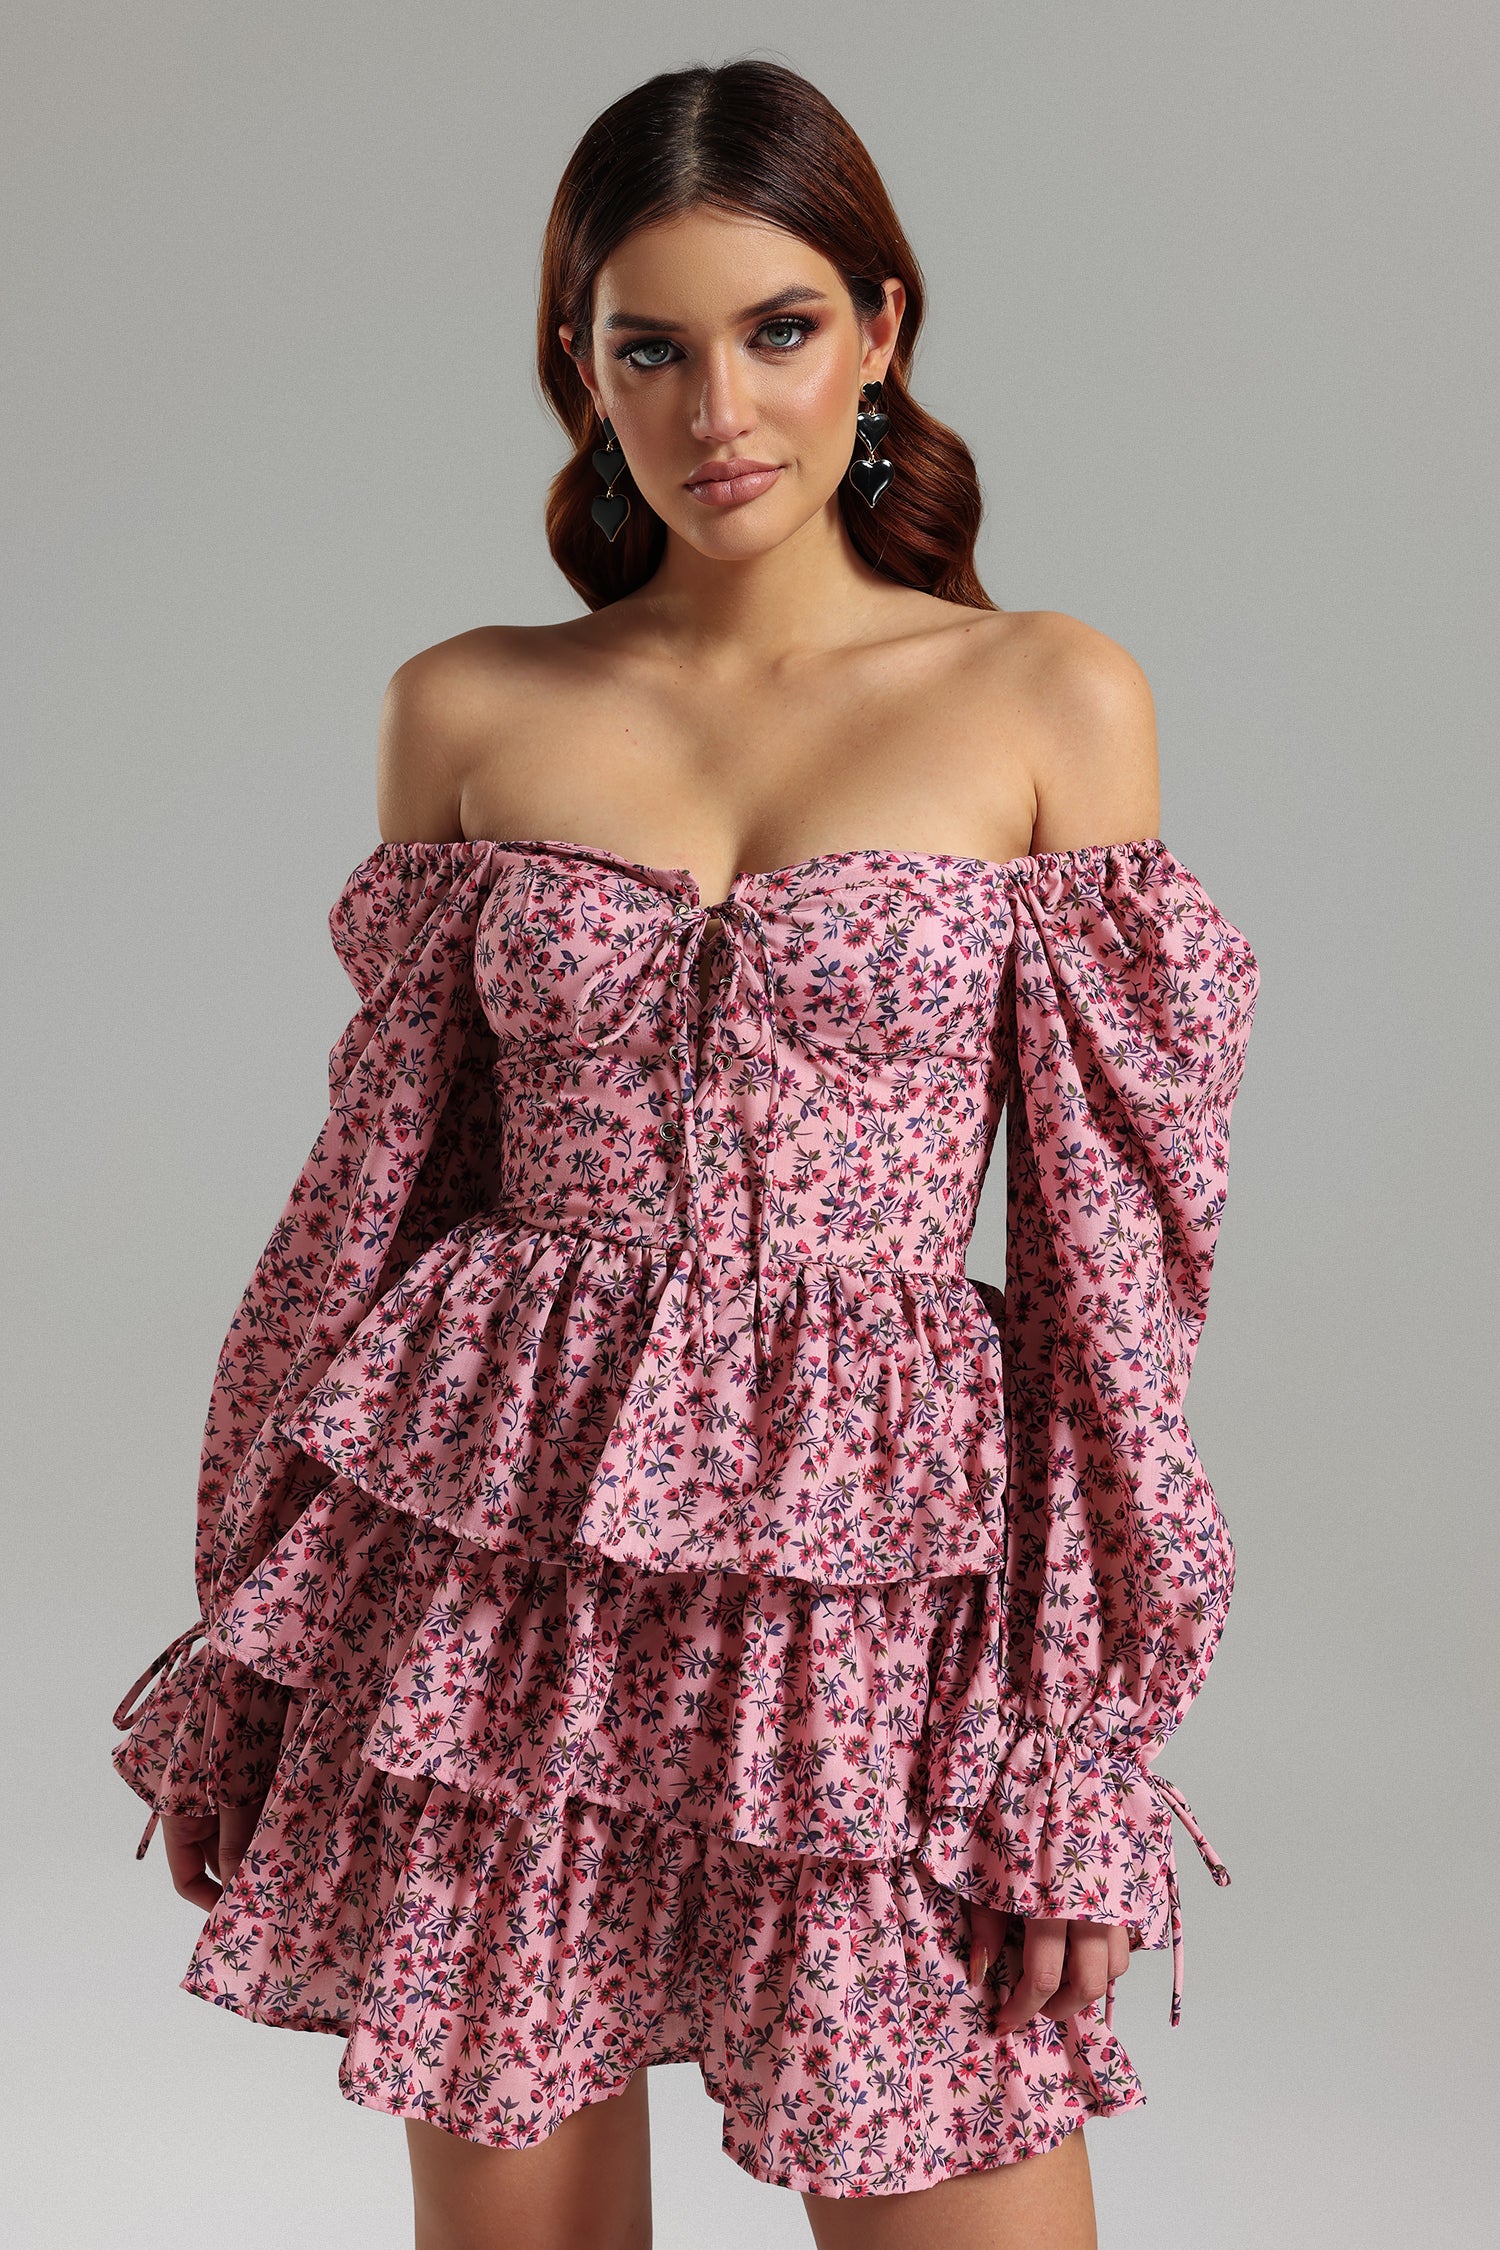 Xenia Layered Printed Mini Dress